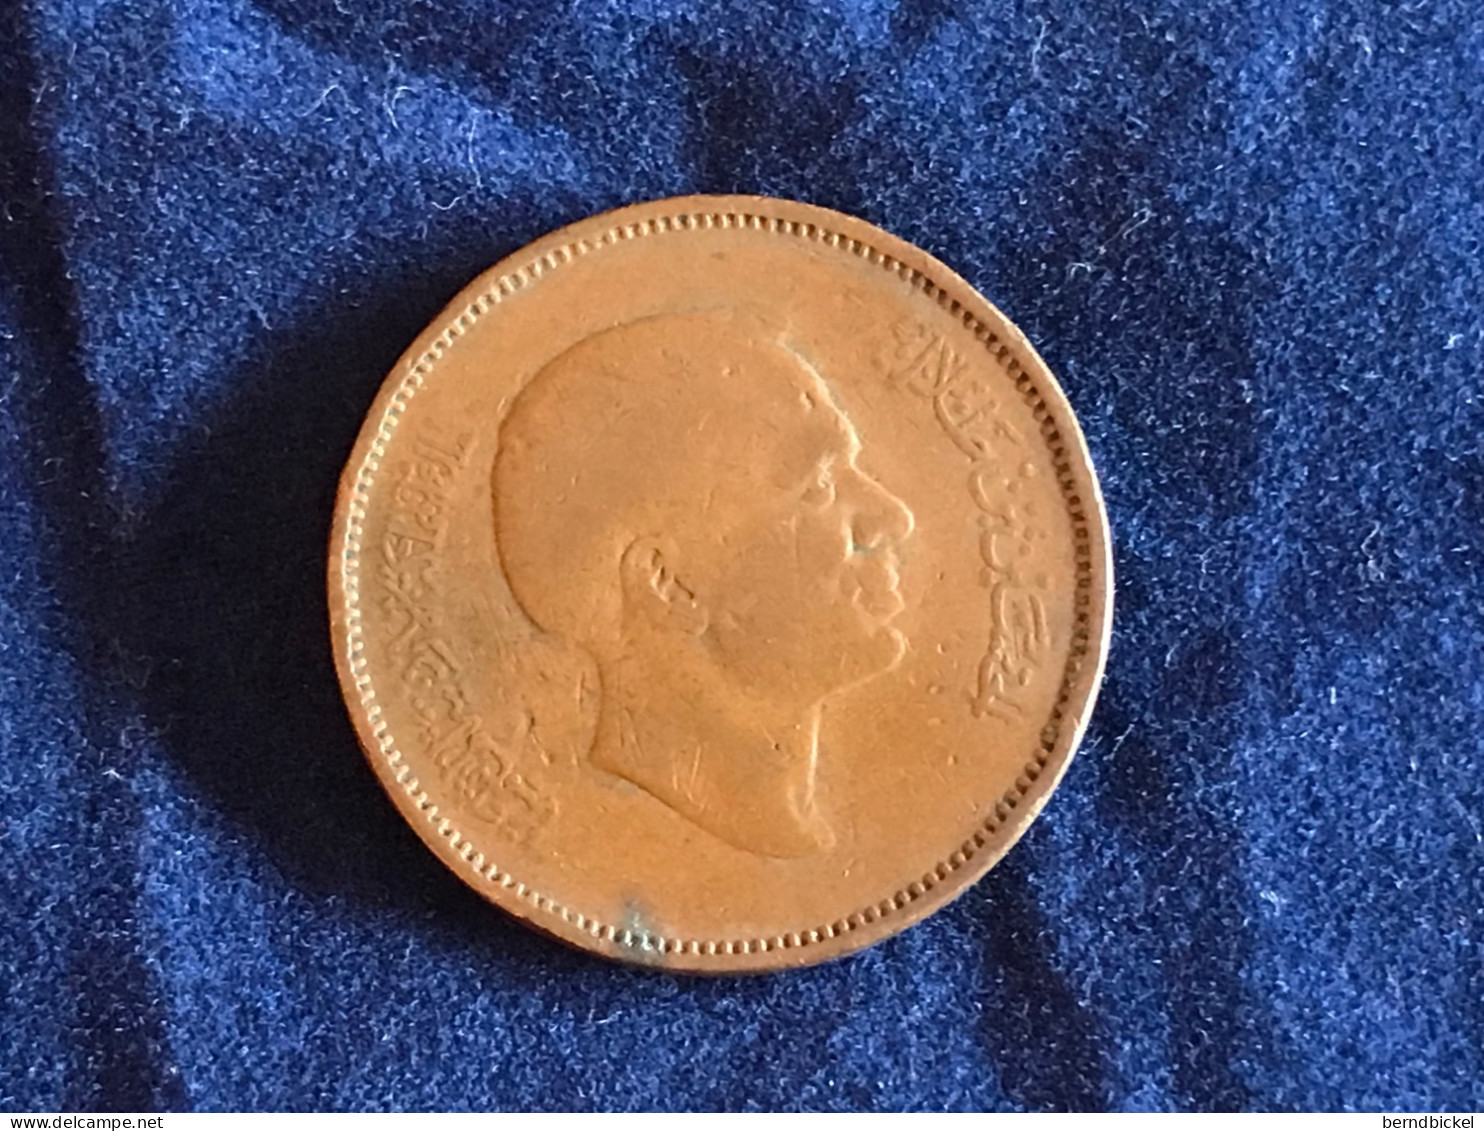 Münze Münzen Umlaufmünze Jordanien 5 Fils 1970 - Jordanien